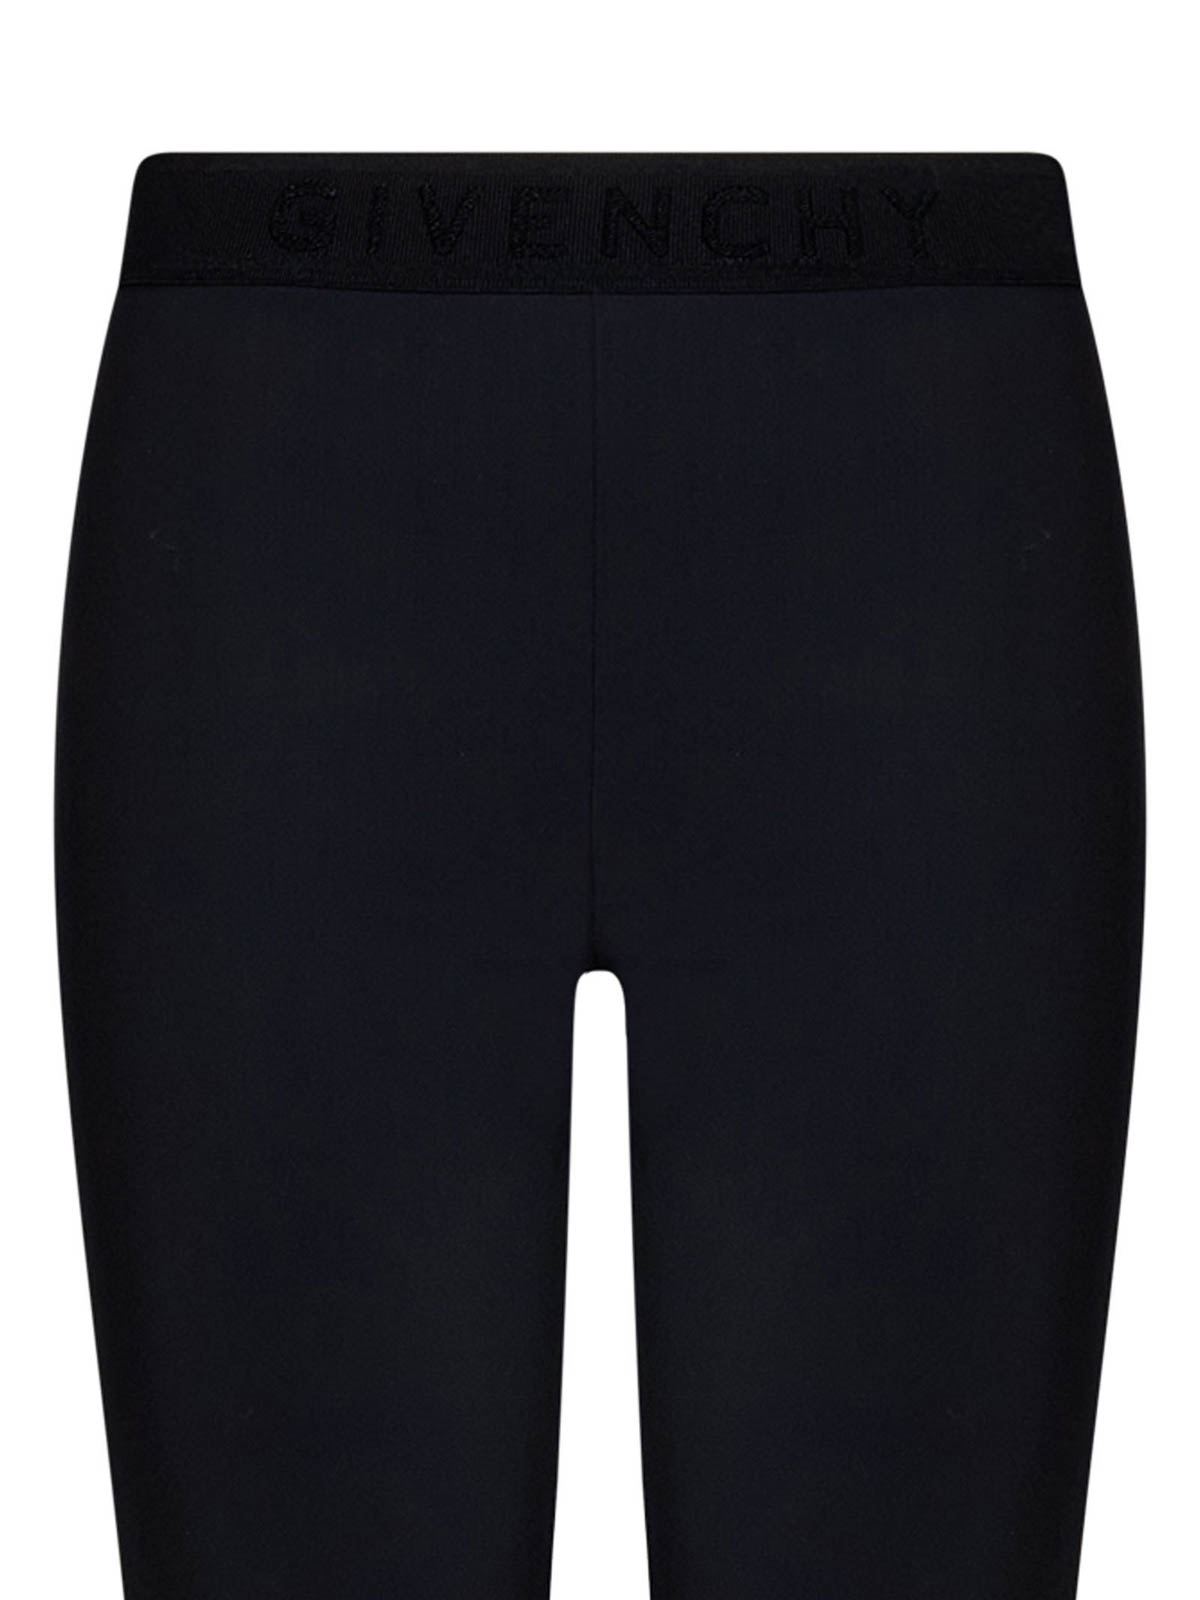 Black Elasticized Leggings by Givenchy on Sale